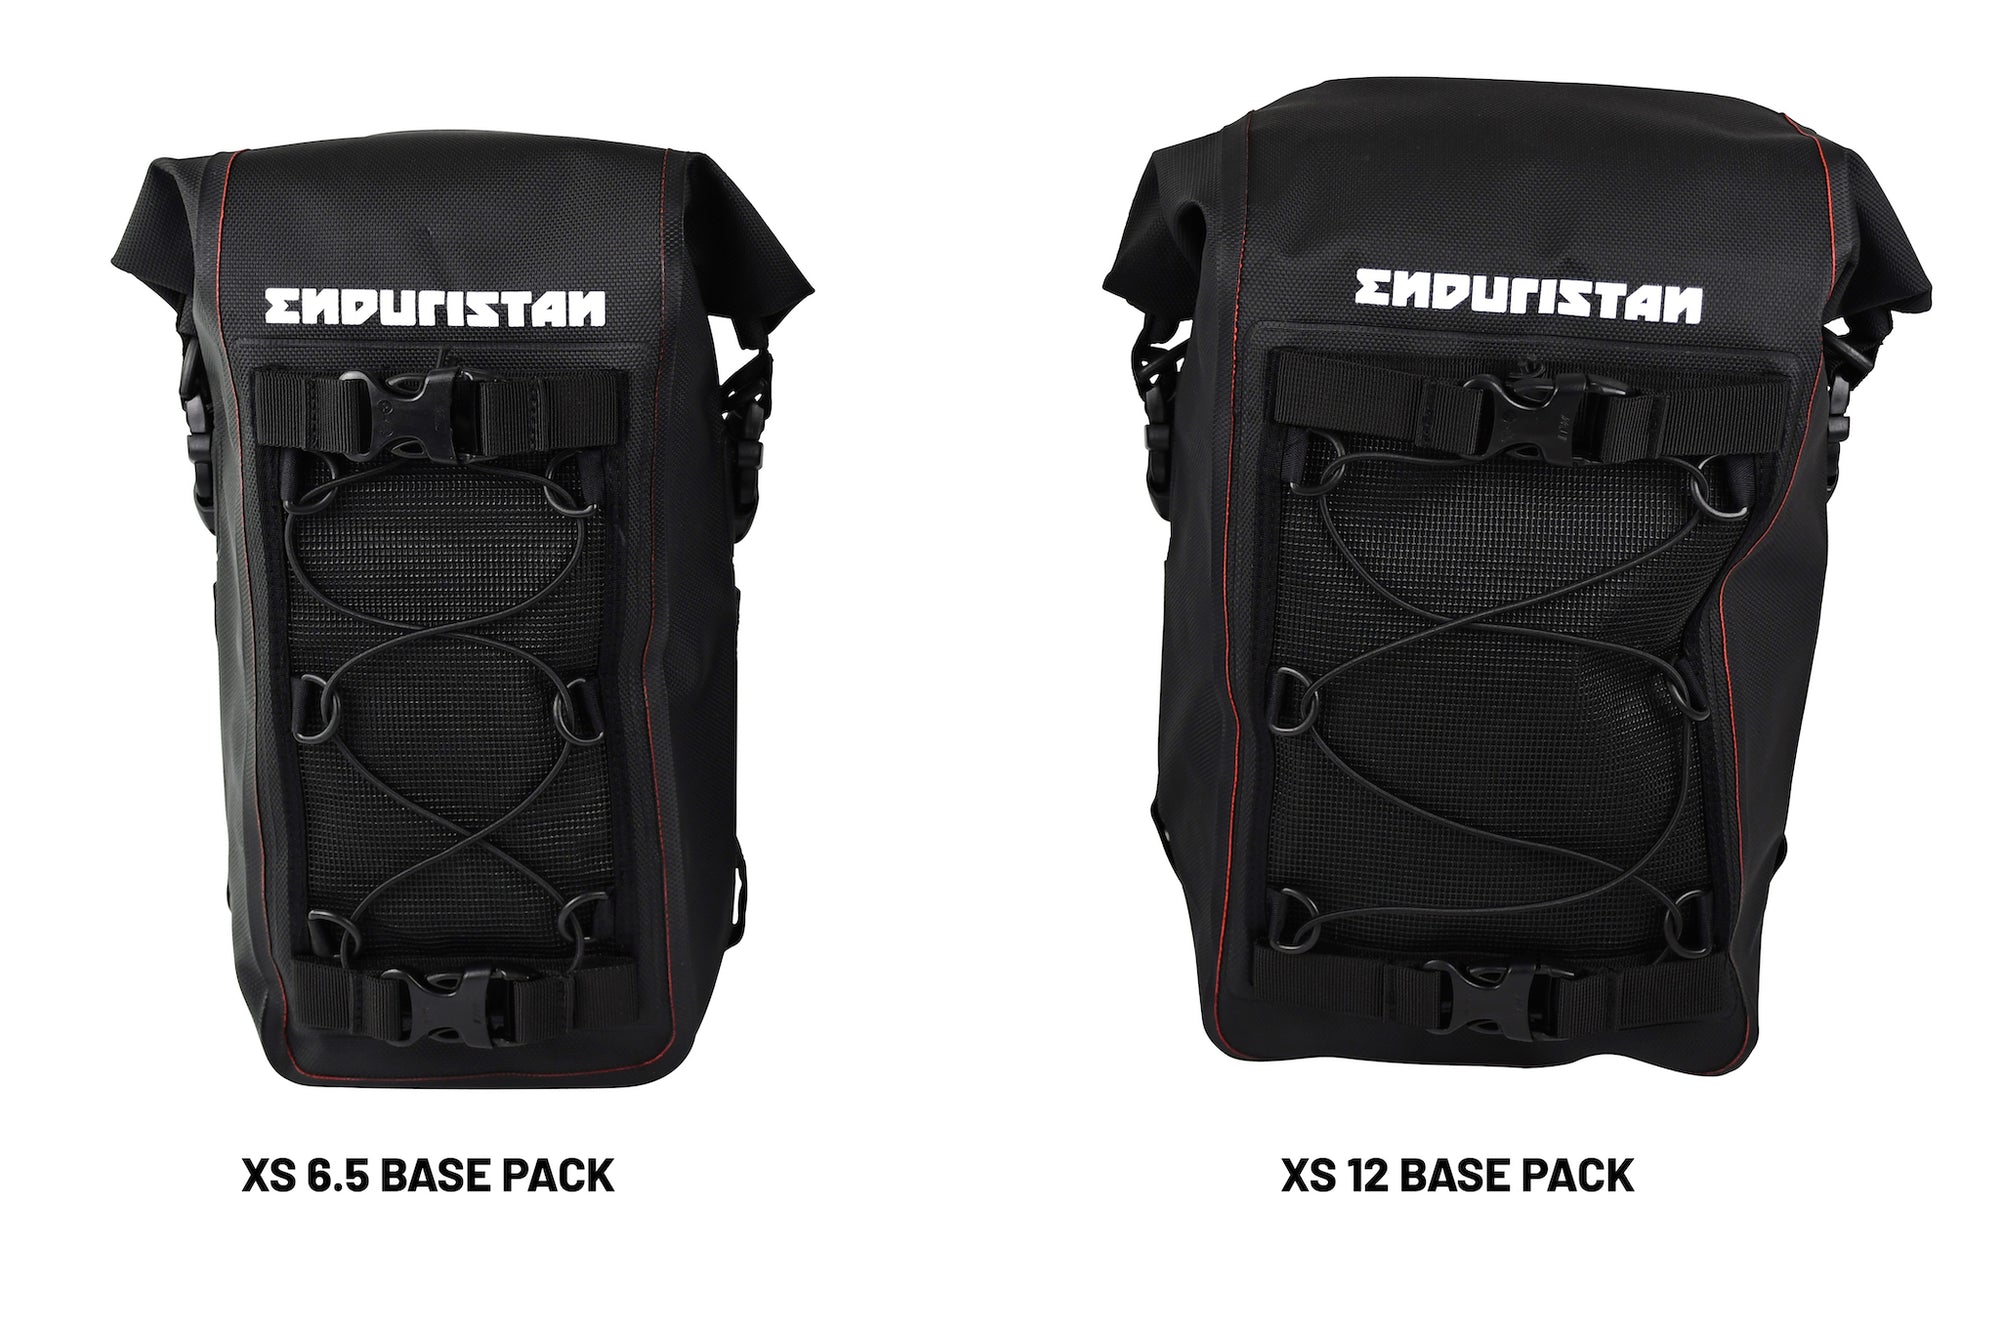 XS 12 Base Pack Packtasche